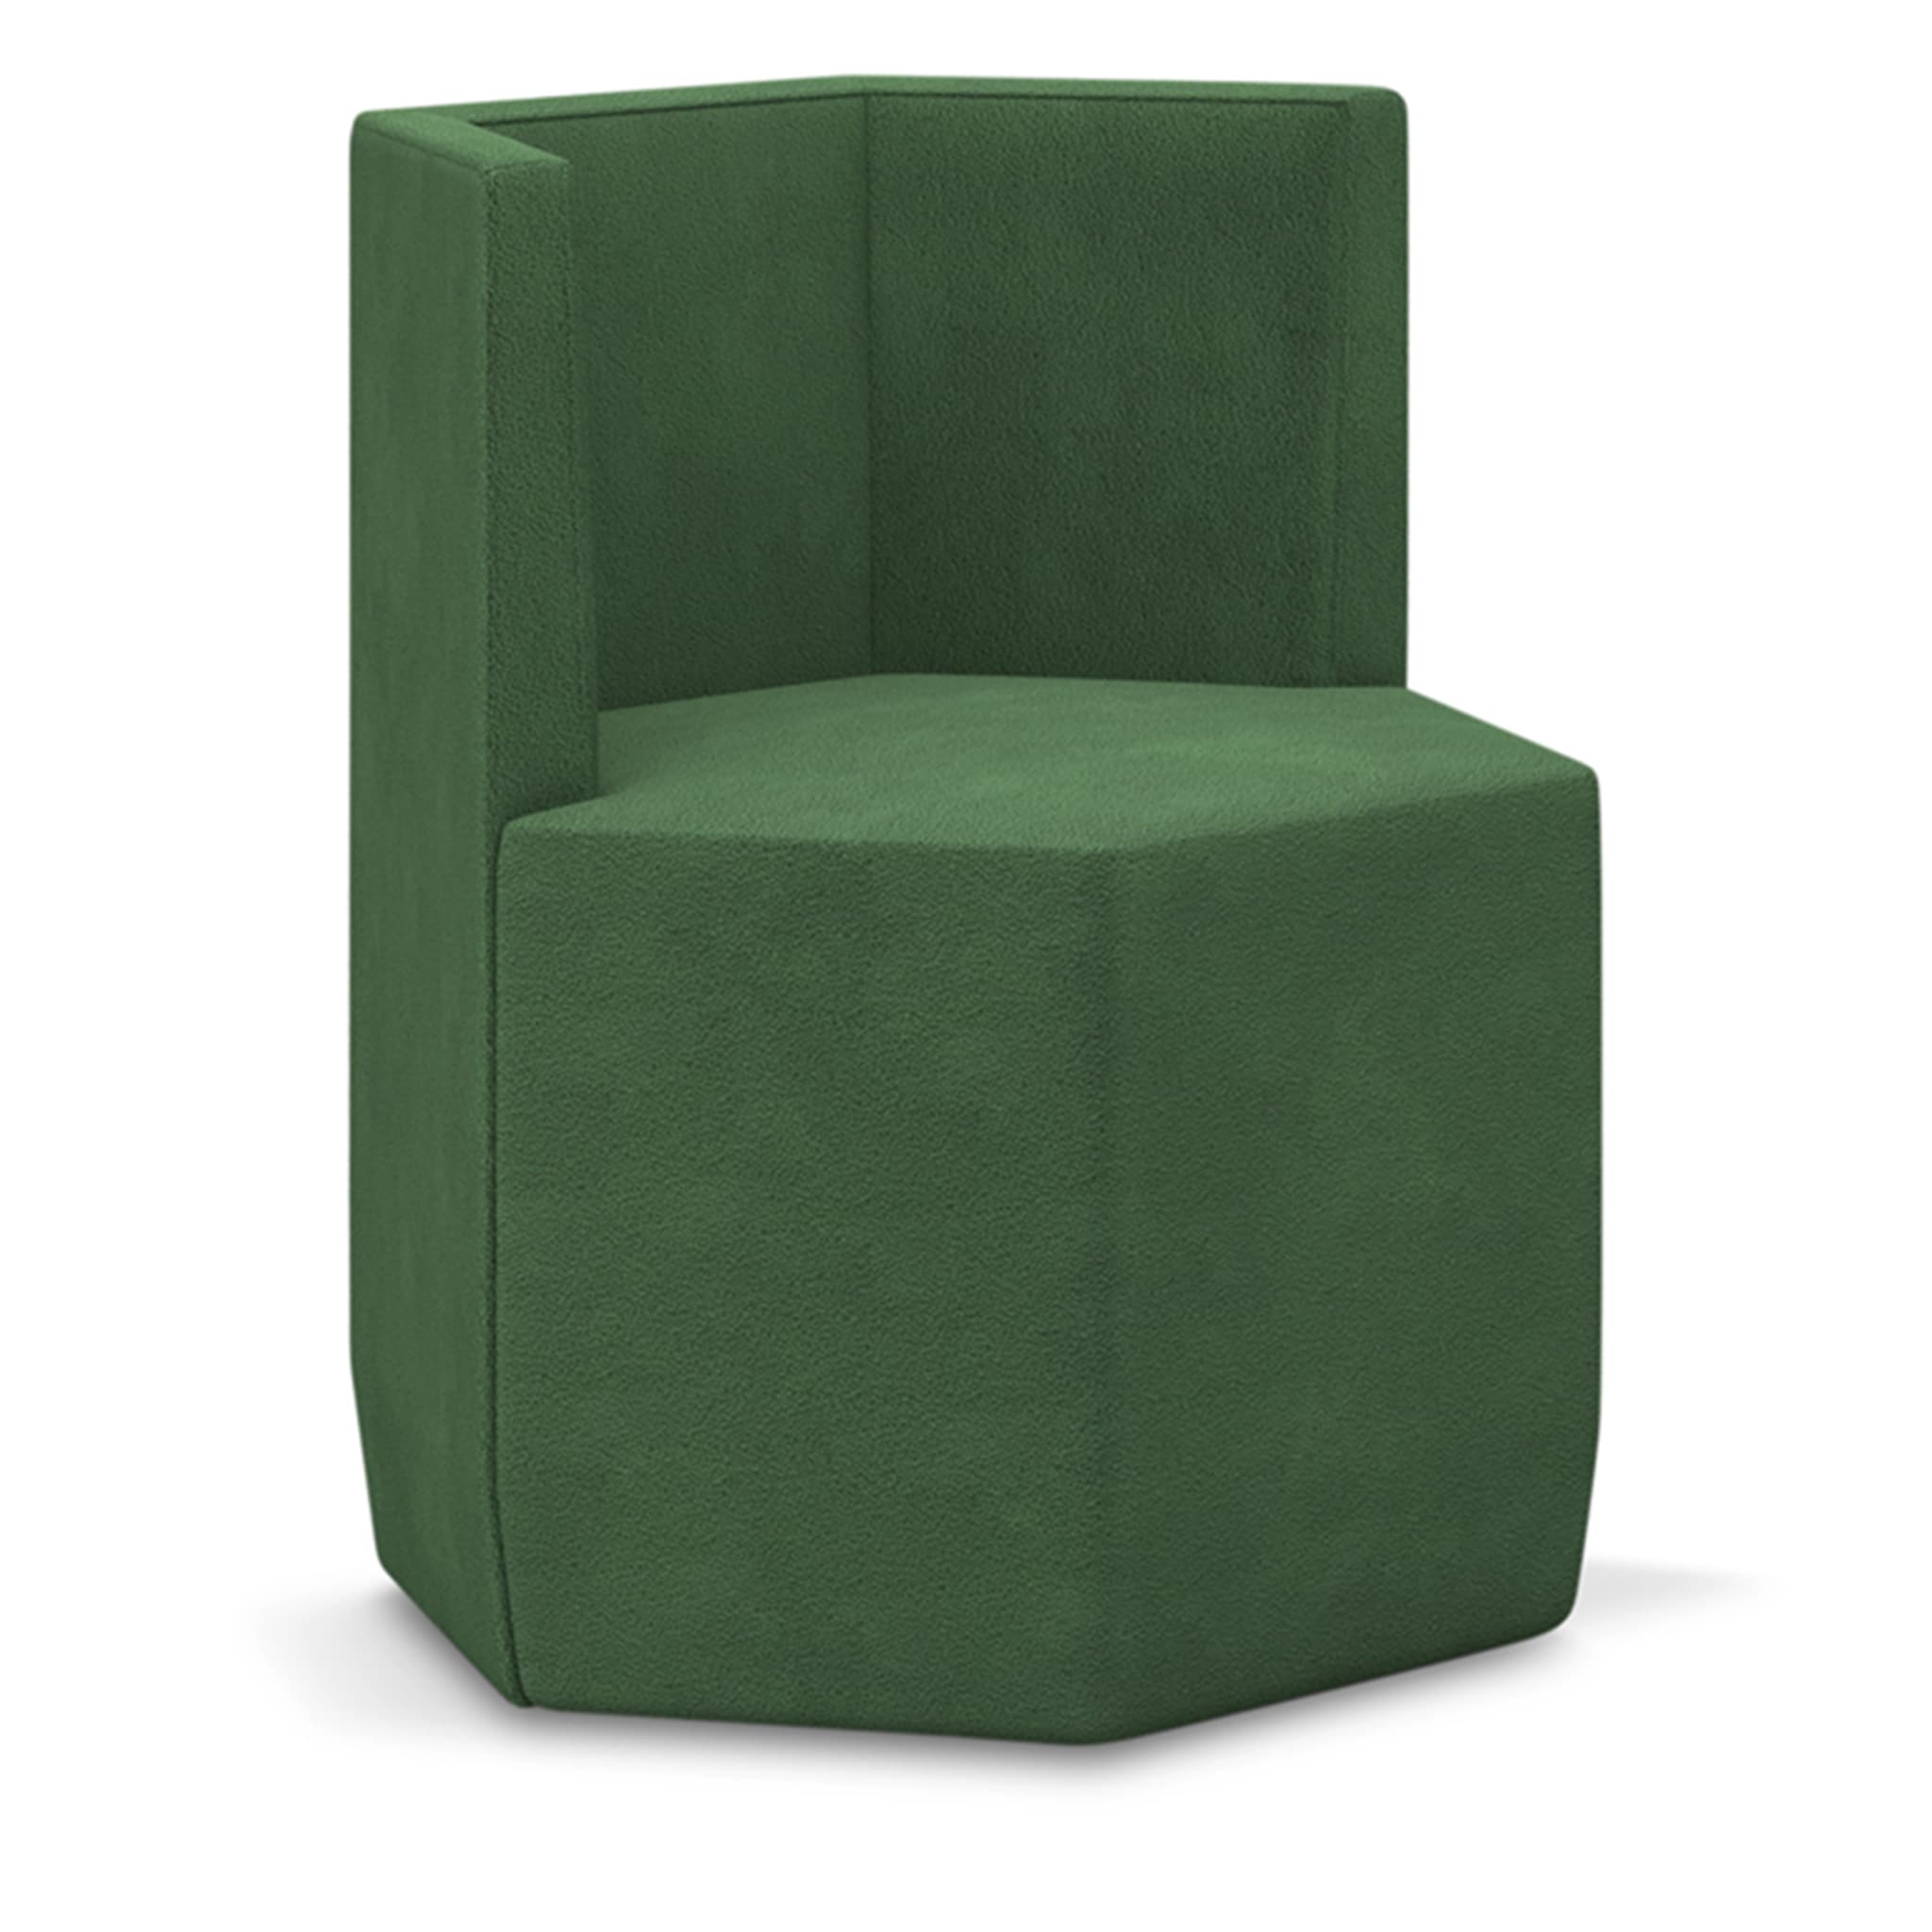 Tigram Low Green Armchair by Italo Pertichini - Alternative view 1